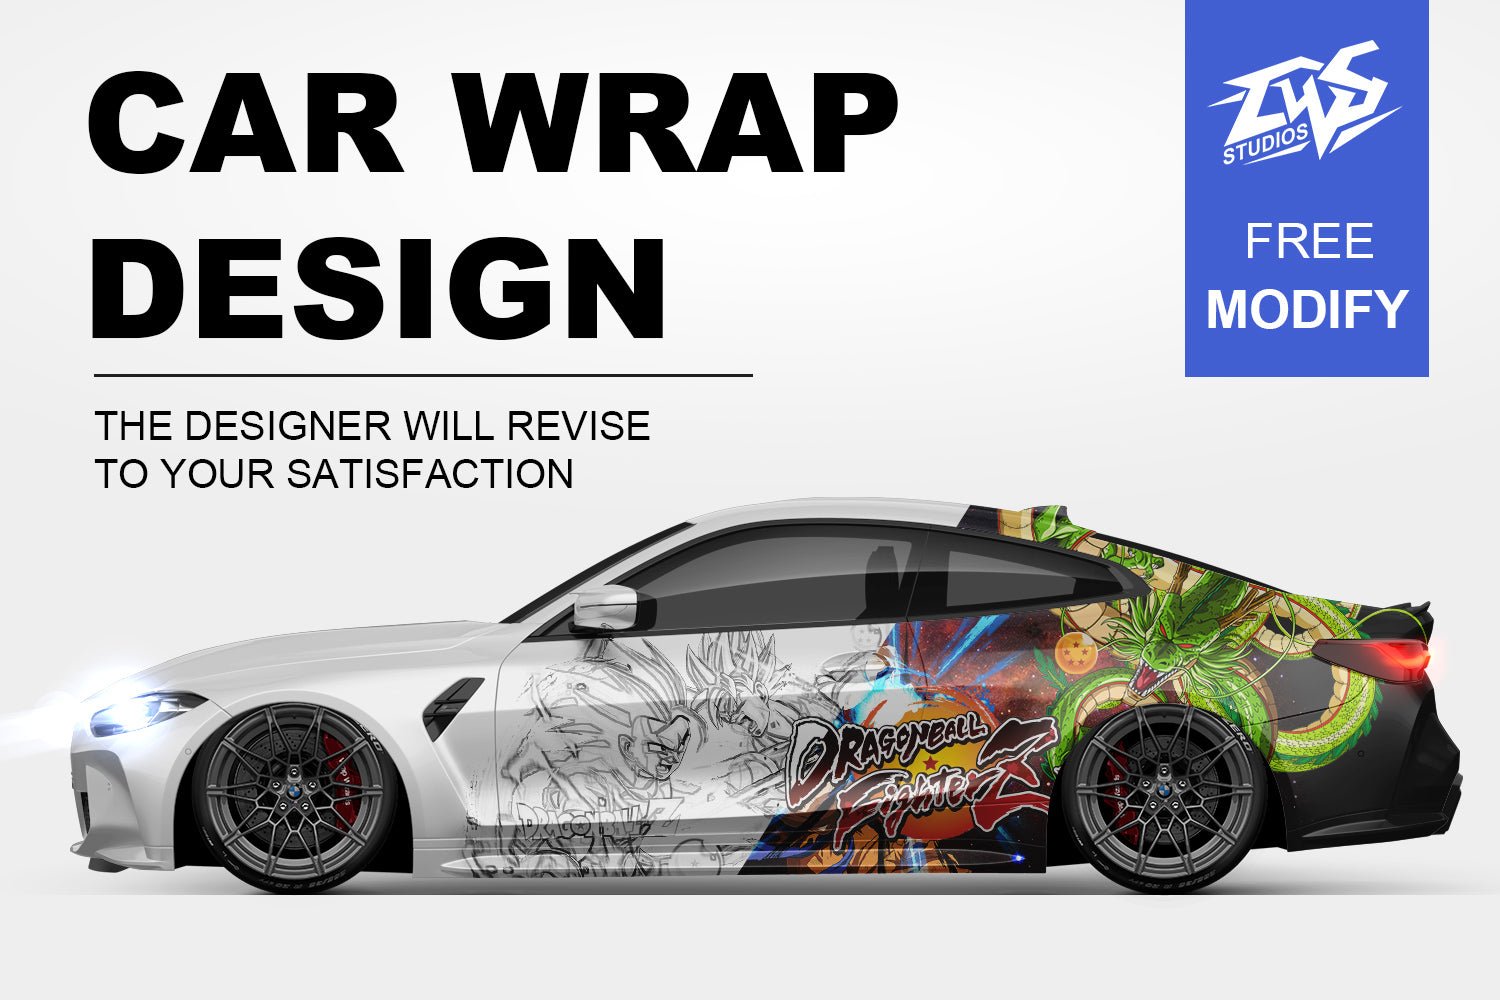 Customized on demand vehicle wrap - Car Wrap Store